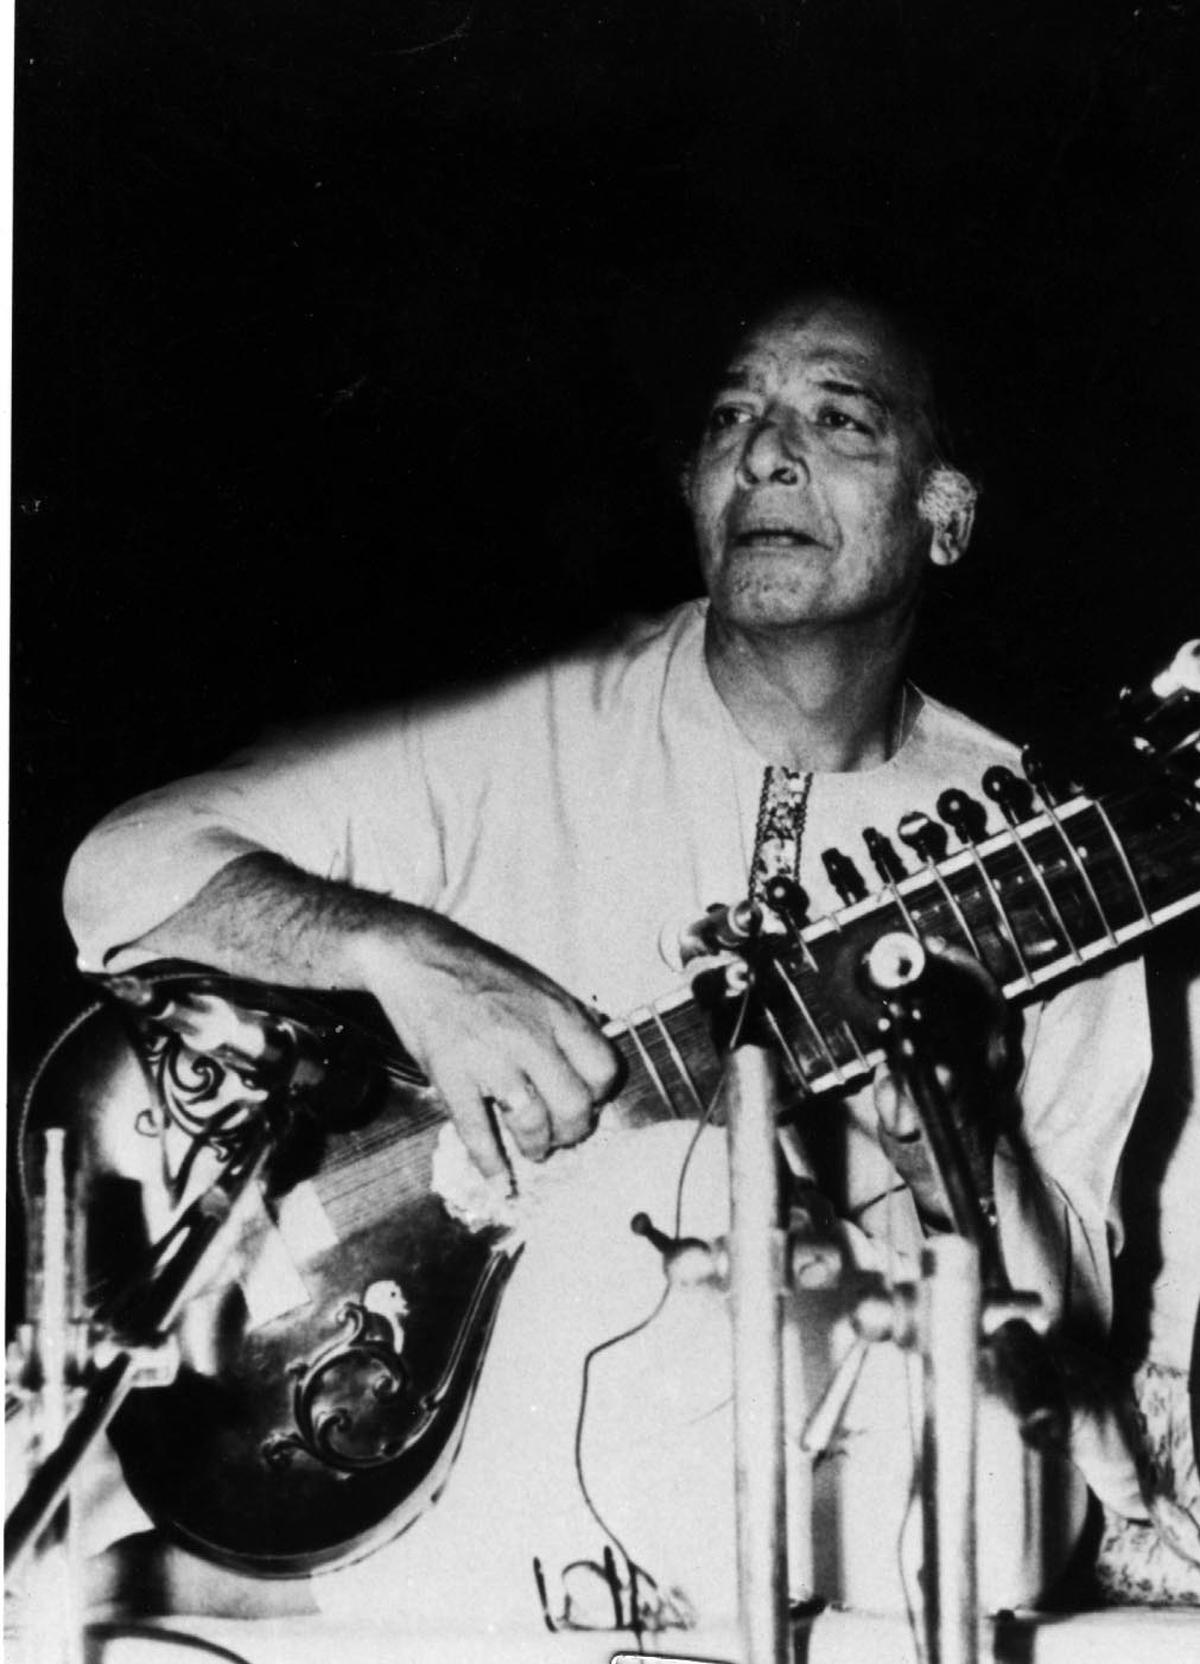 Sitar maestro and Arvind Parikhs’s guru Ustad Vilayat Khan